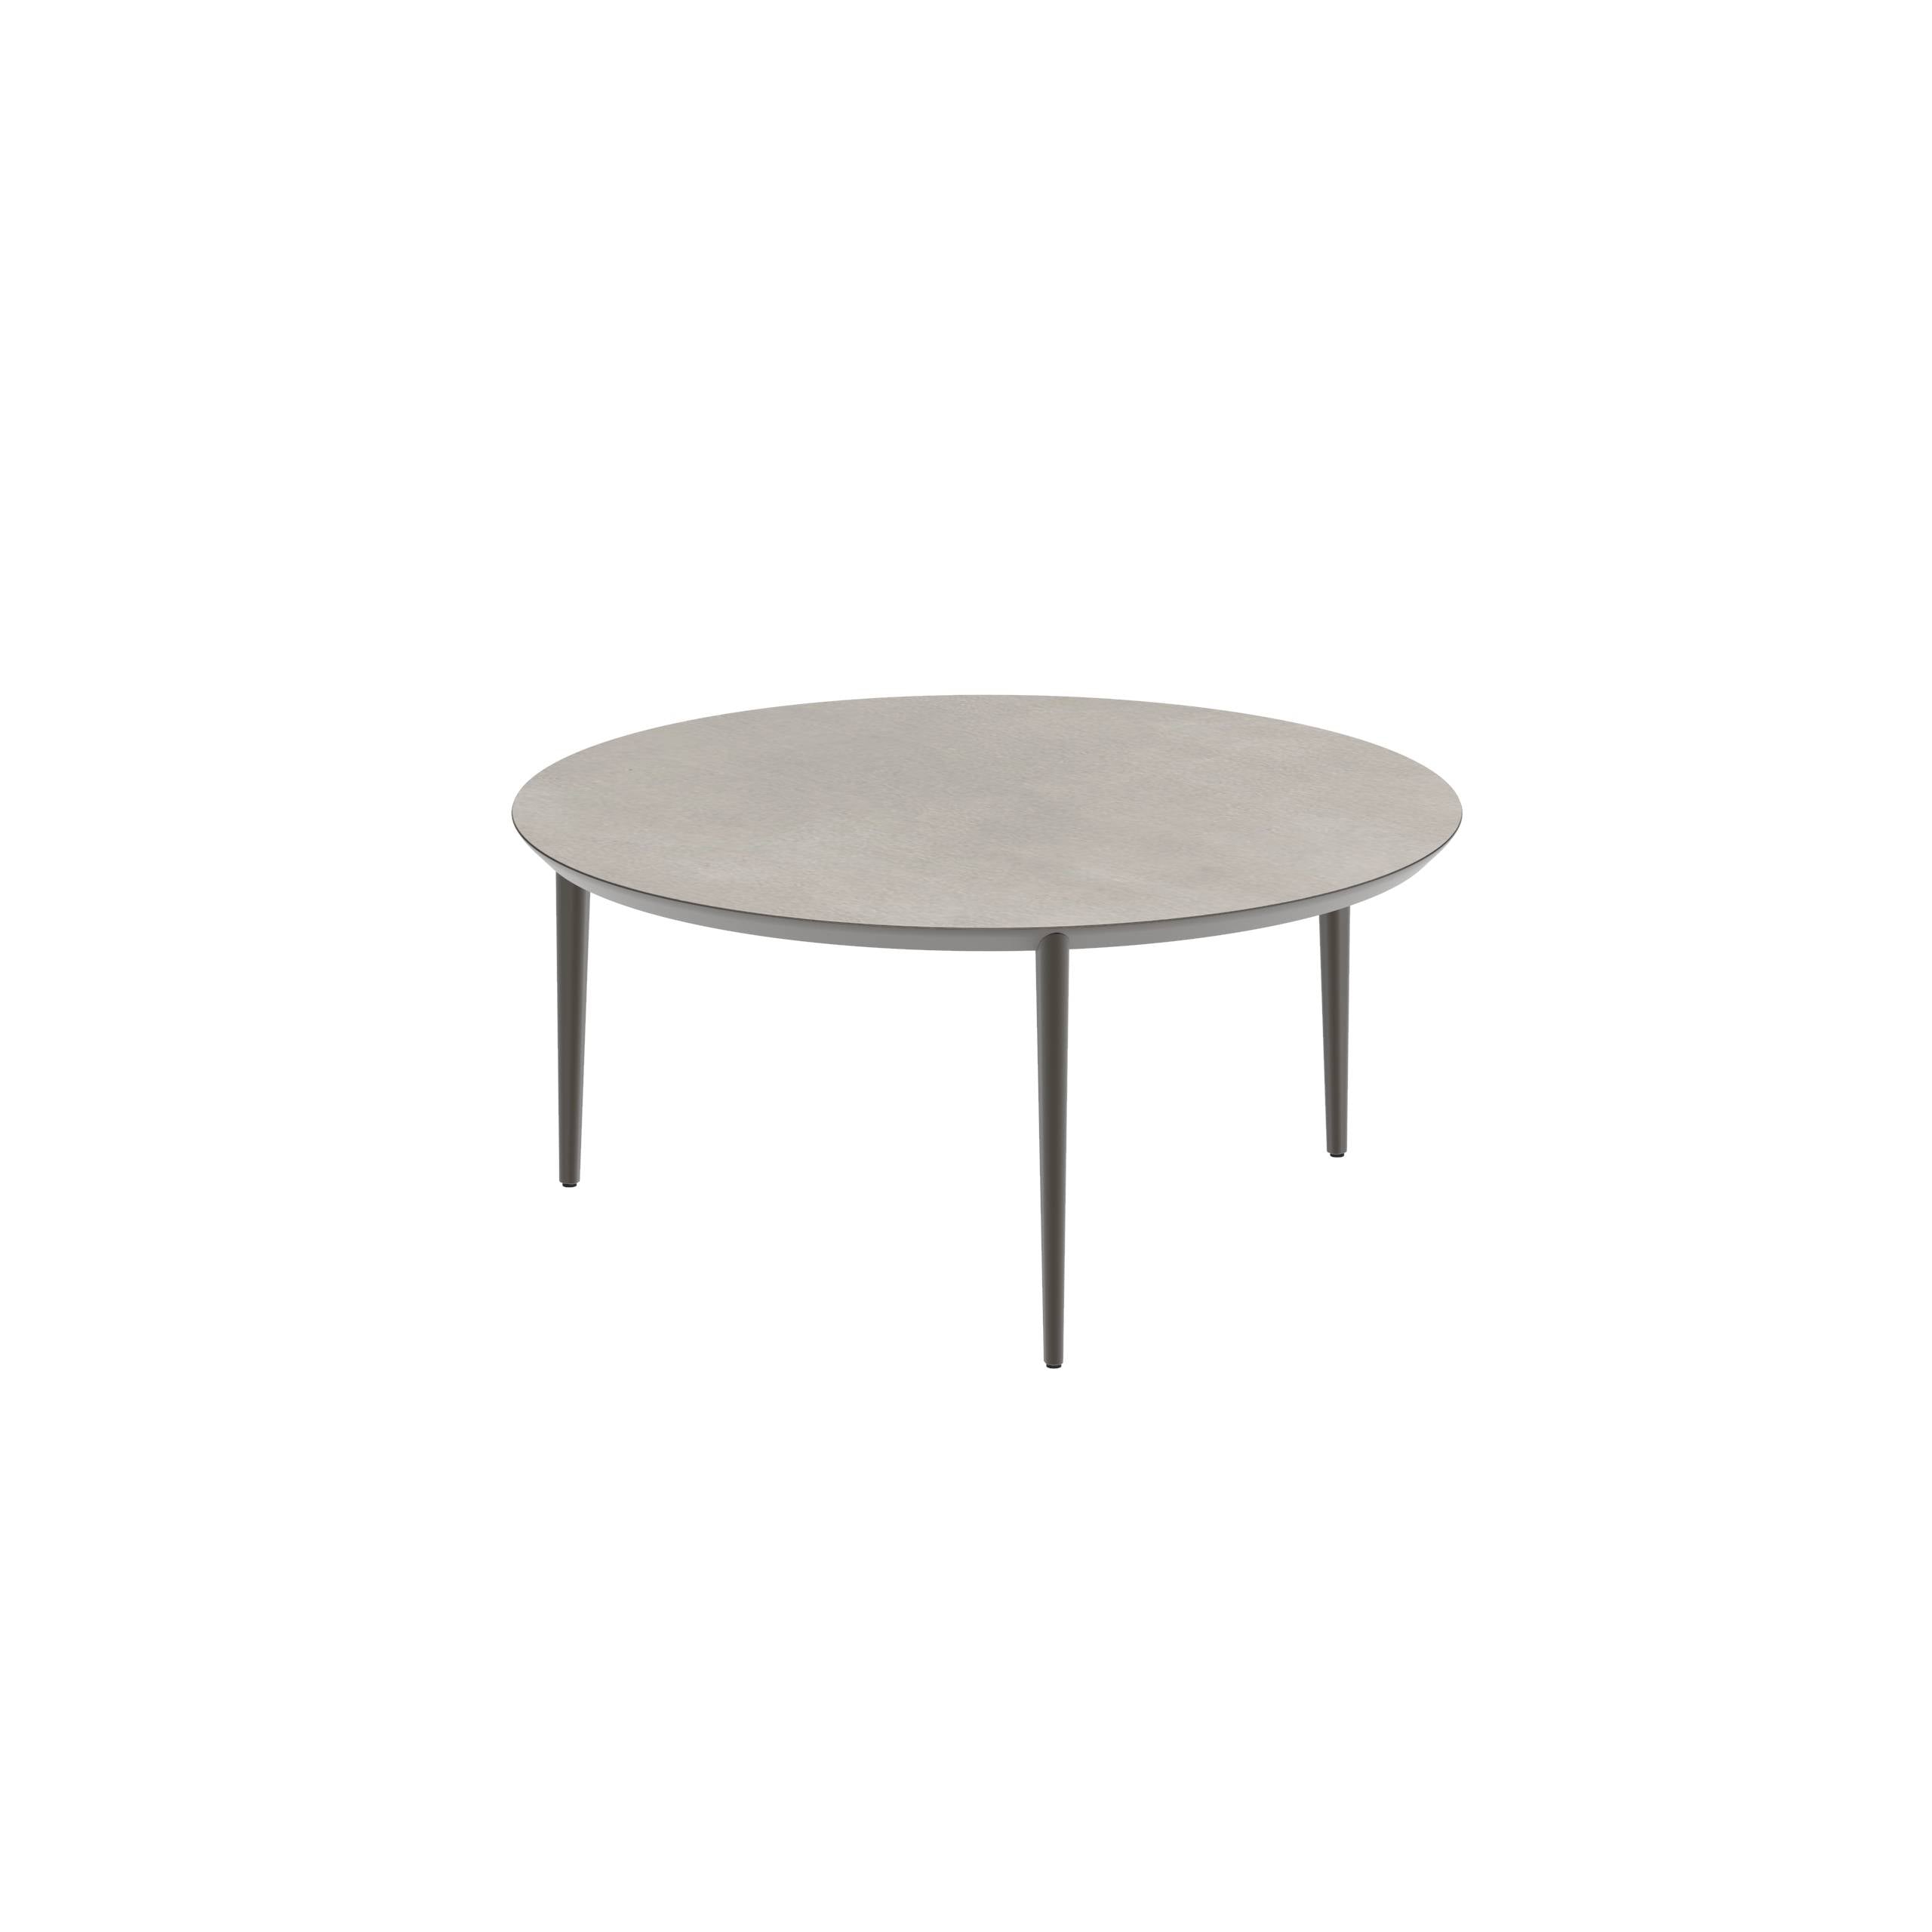 U-Nite Table Round Ø 160cm Alu Legs Bronze - Table Top Ceramic Cemento Luminoso